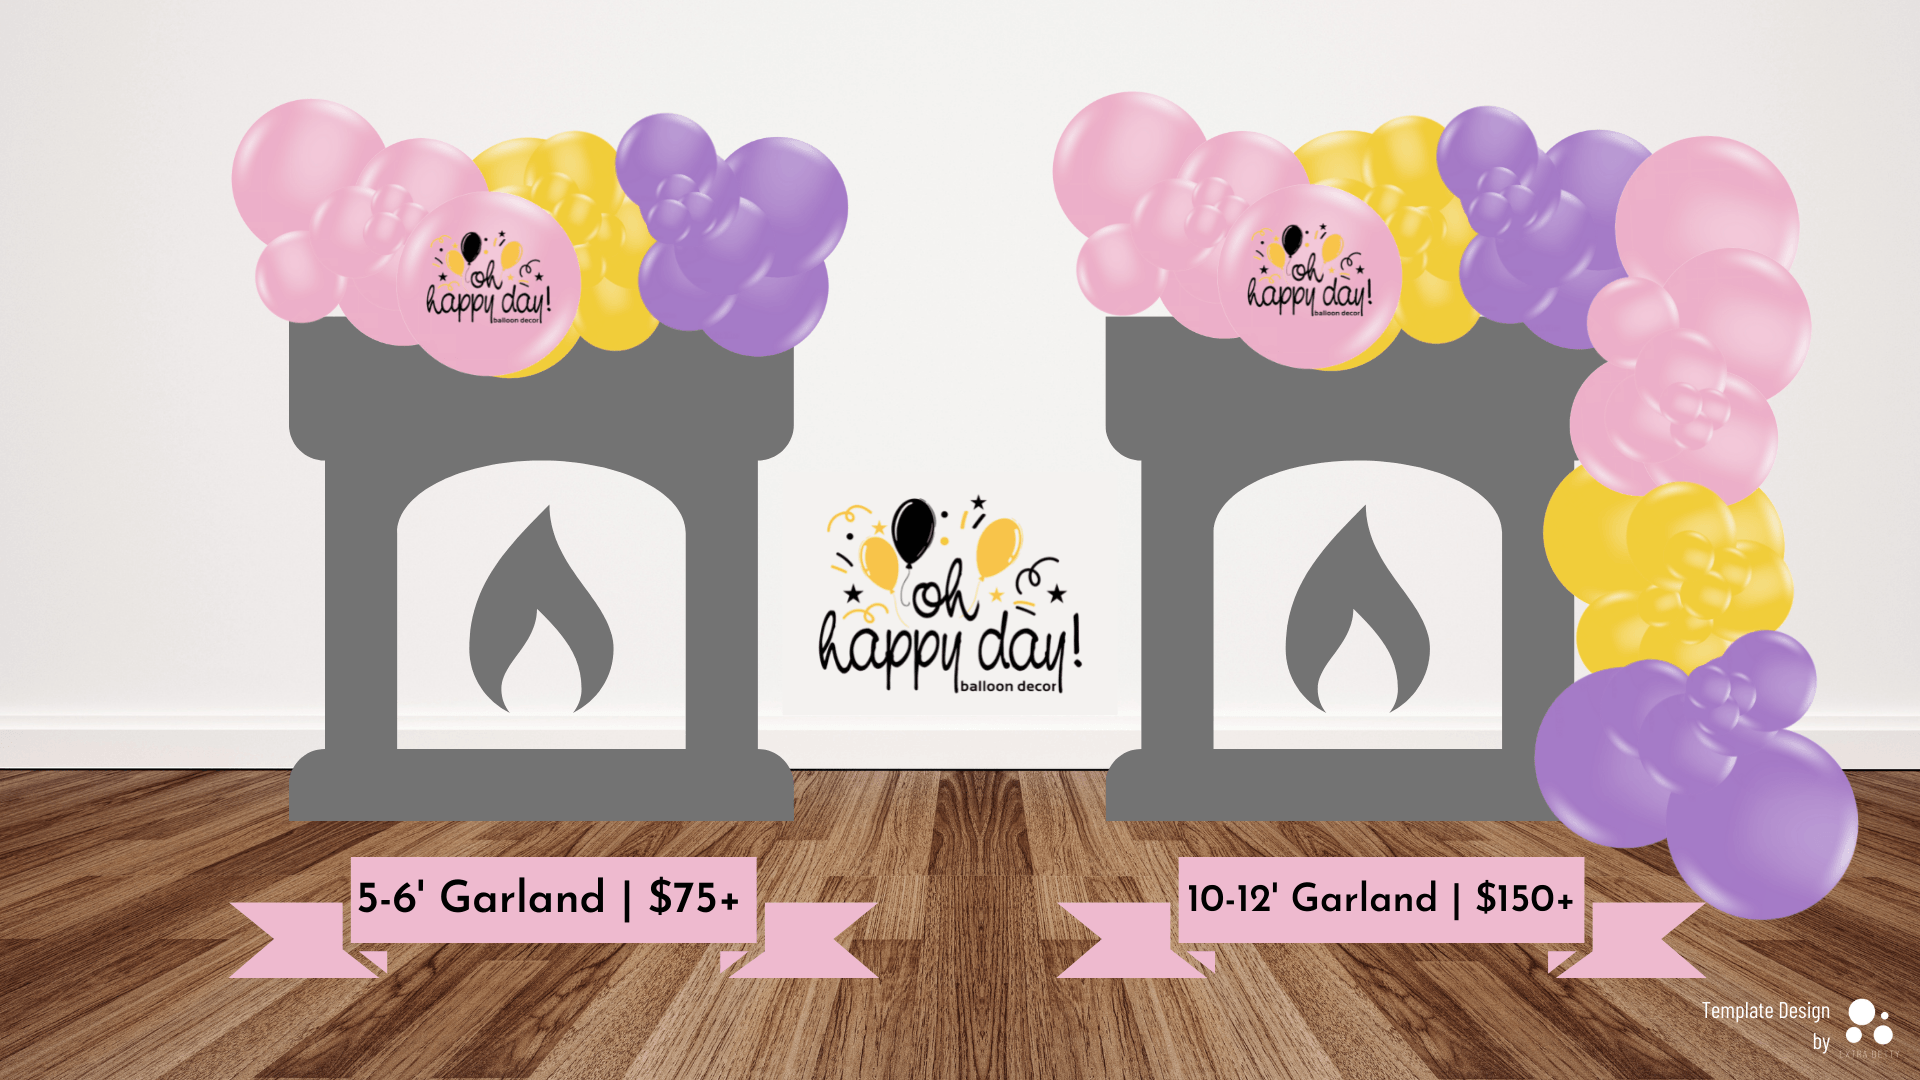 Balloon garland pricing guide 5-6’ Garland $75+ | 10-12’ Garland: $150+